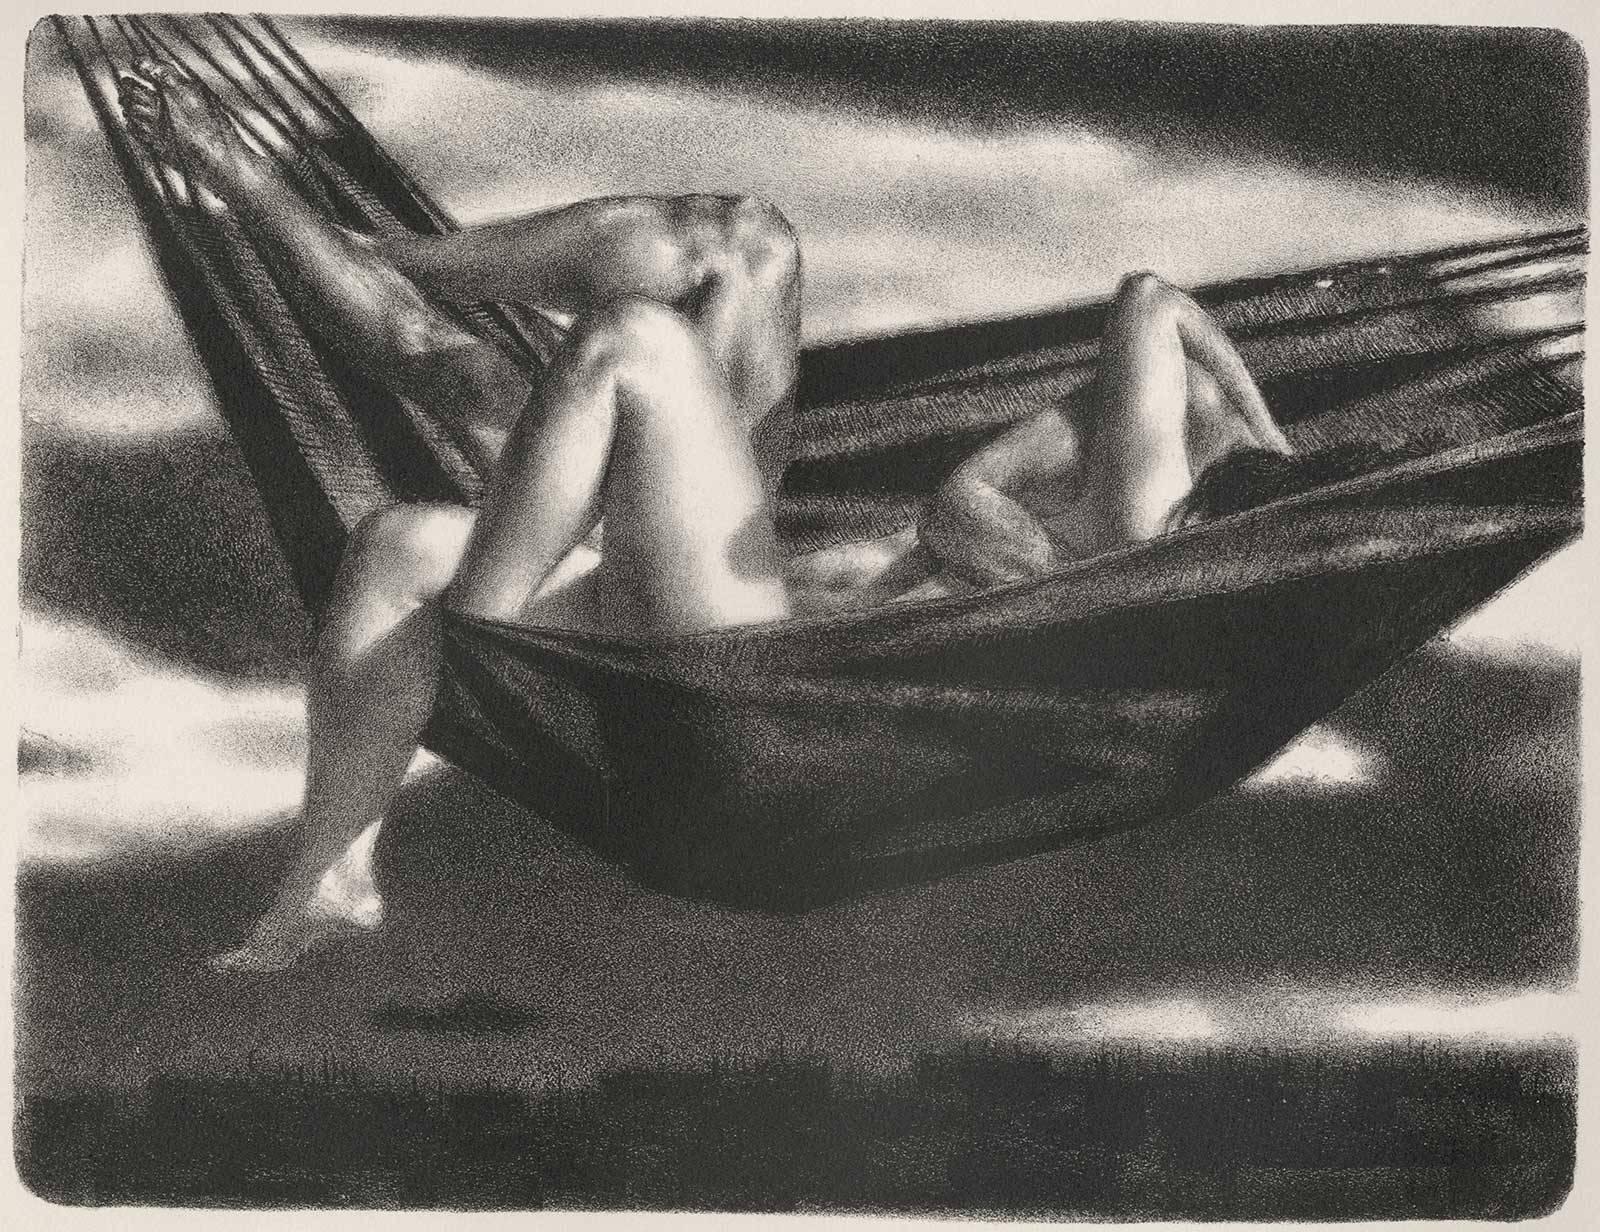 Joseph Hirsch Nude Print - Hammock (A nude couple frolics in a hammock on a lazy summer day)